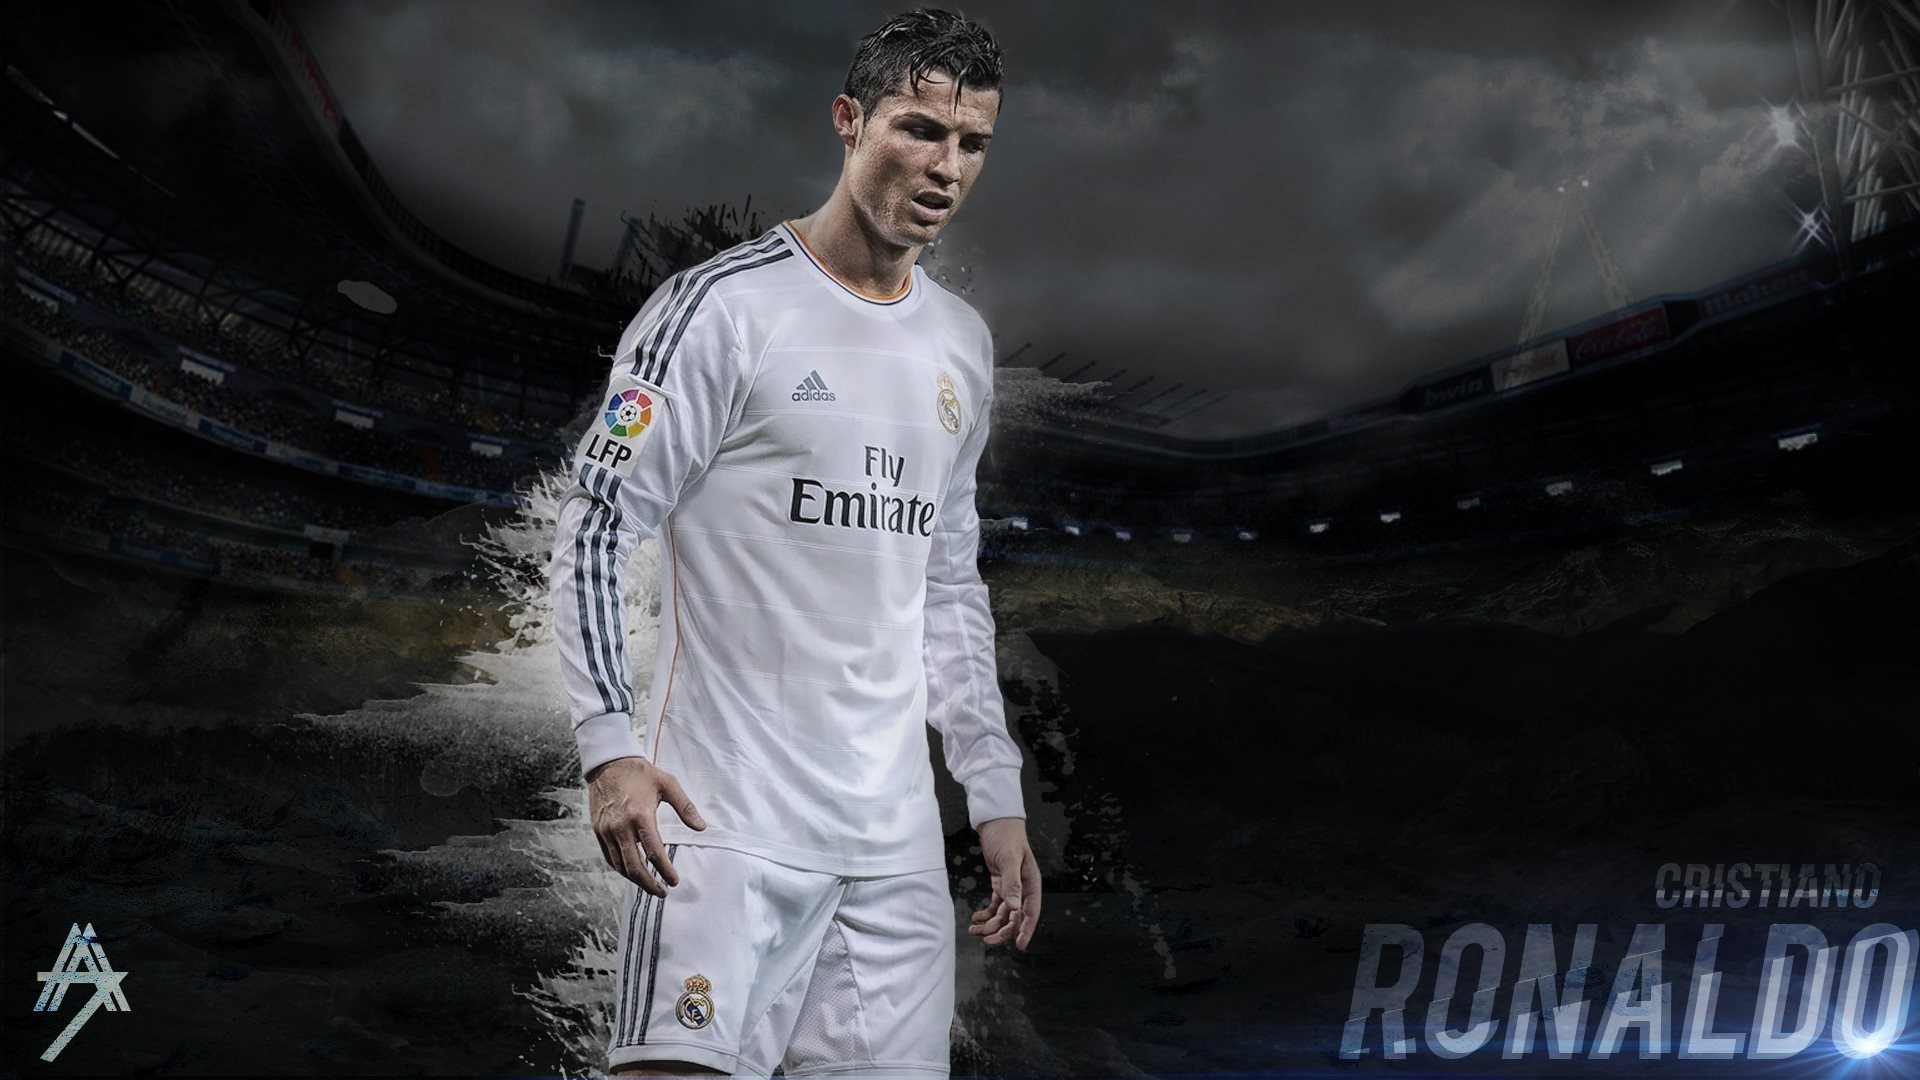 1920x1080 Wallpaper: Cristiano Ronaldo. High Definition HD 